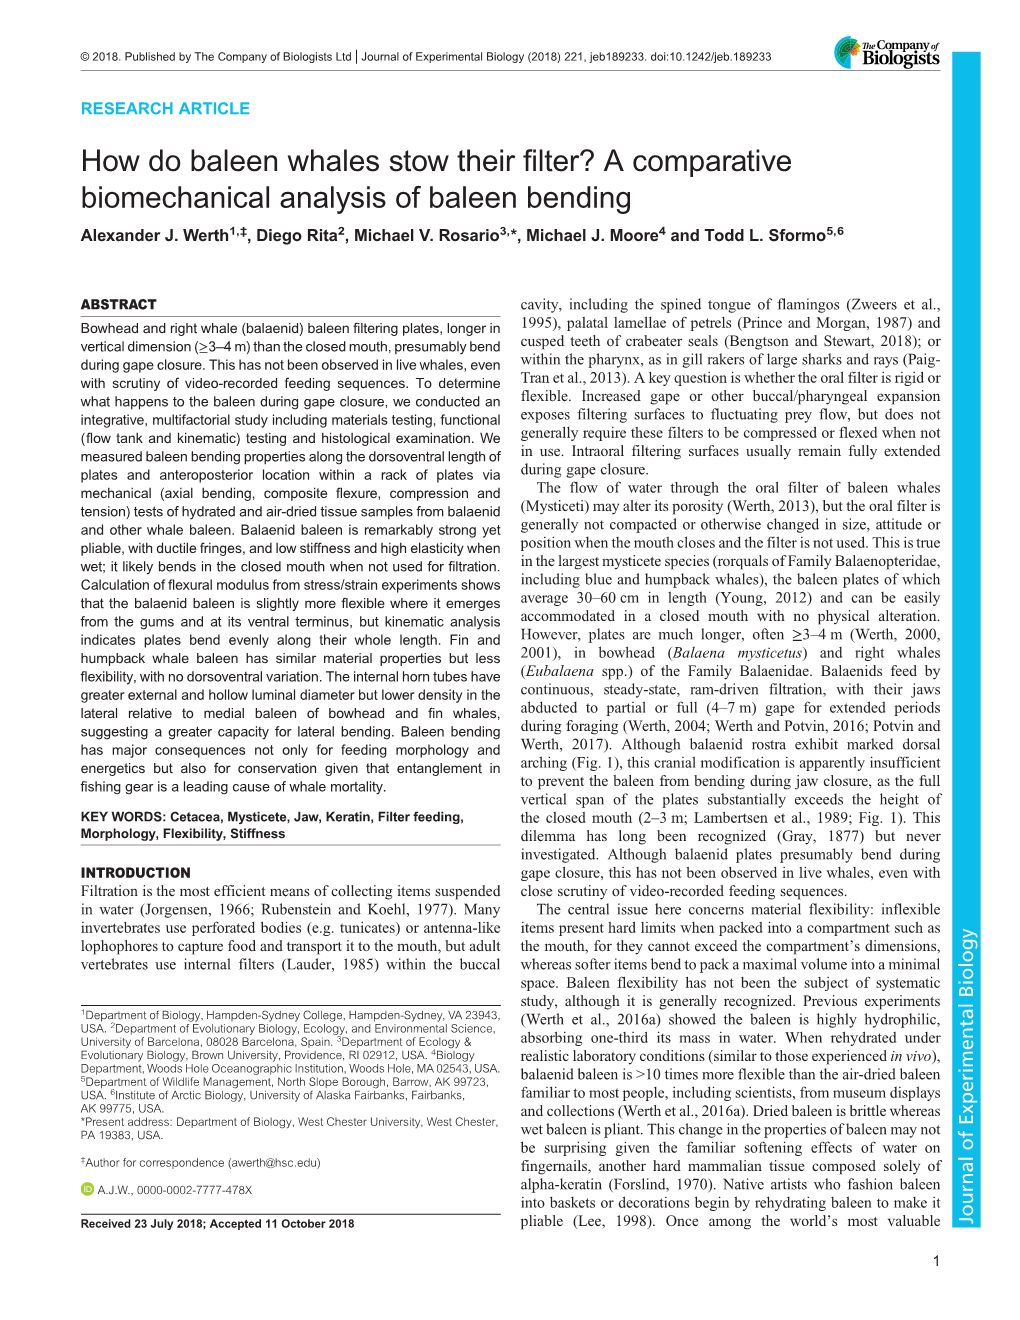 How Do Baleen Whales Stow Their Filter? a Comparative Biomechanical Analysis of Baleen Bending Alexander J